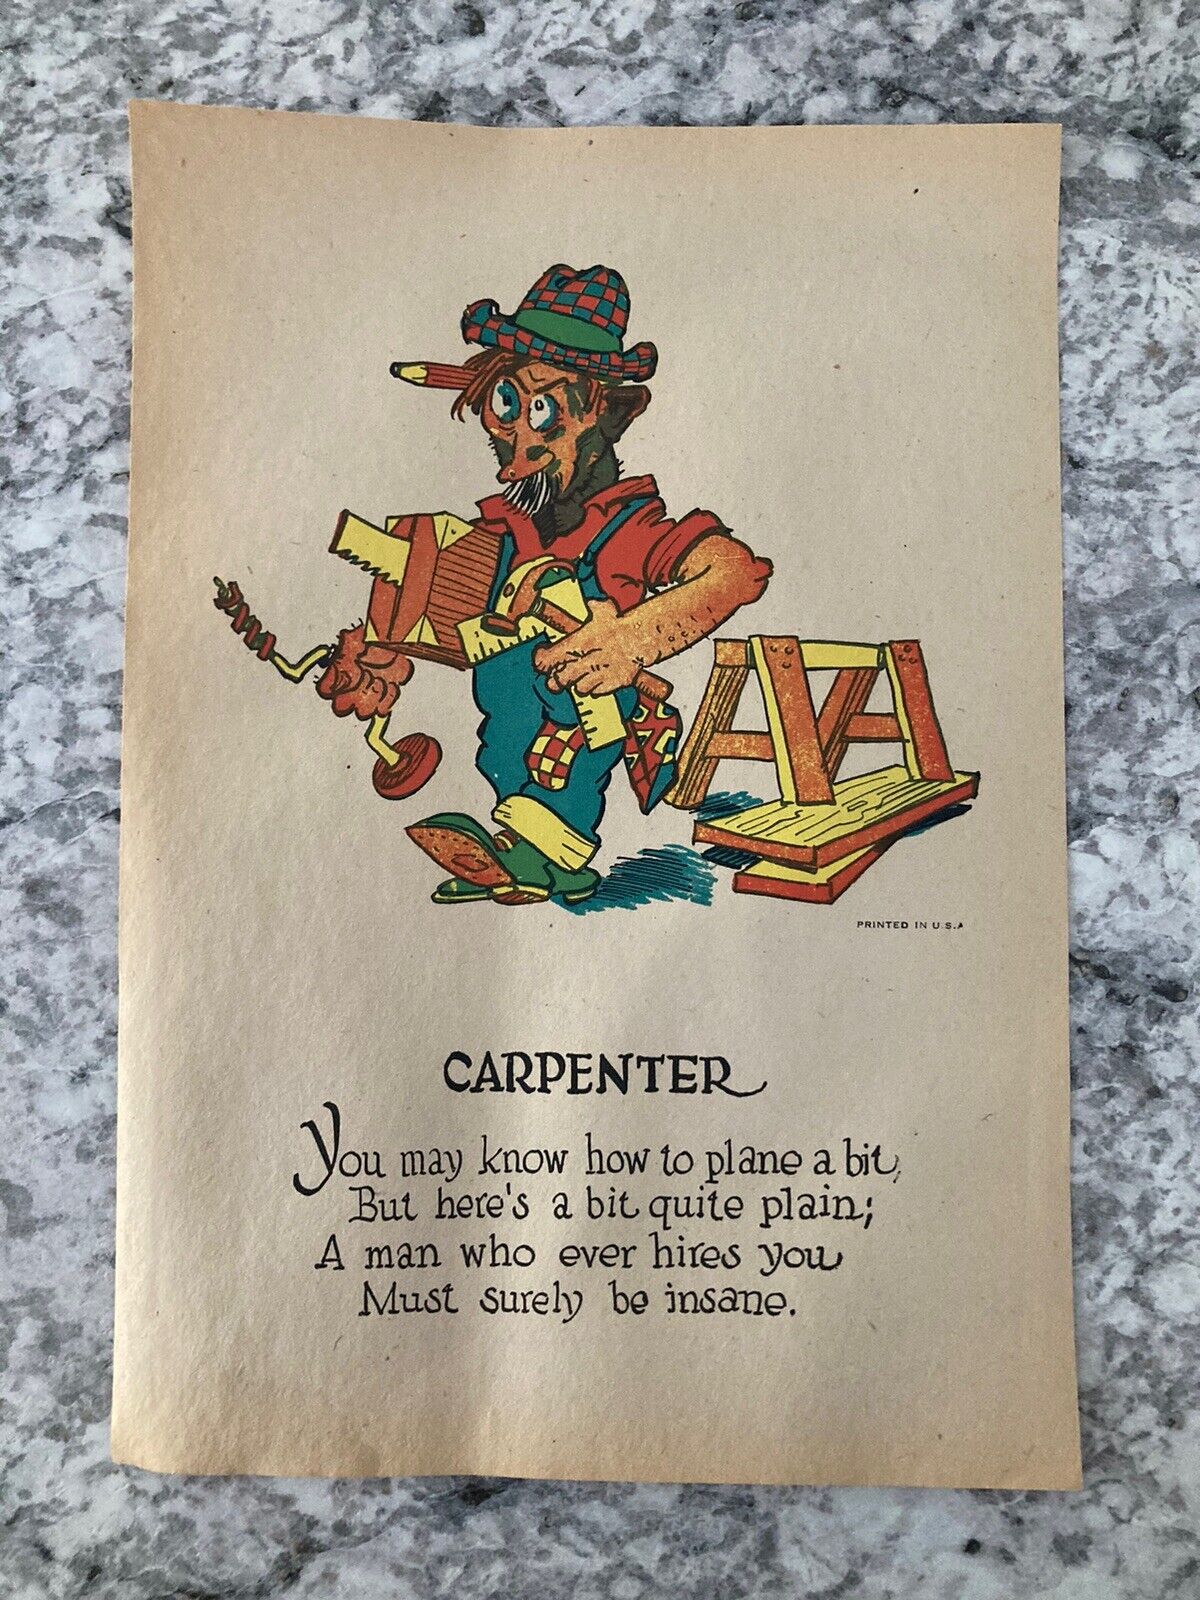 Vinegar Valentine “Carpenter” 7”x10” Vintage Lithograph Original